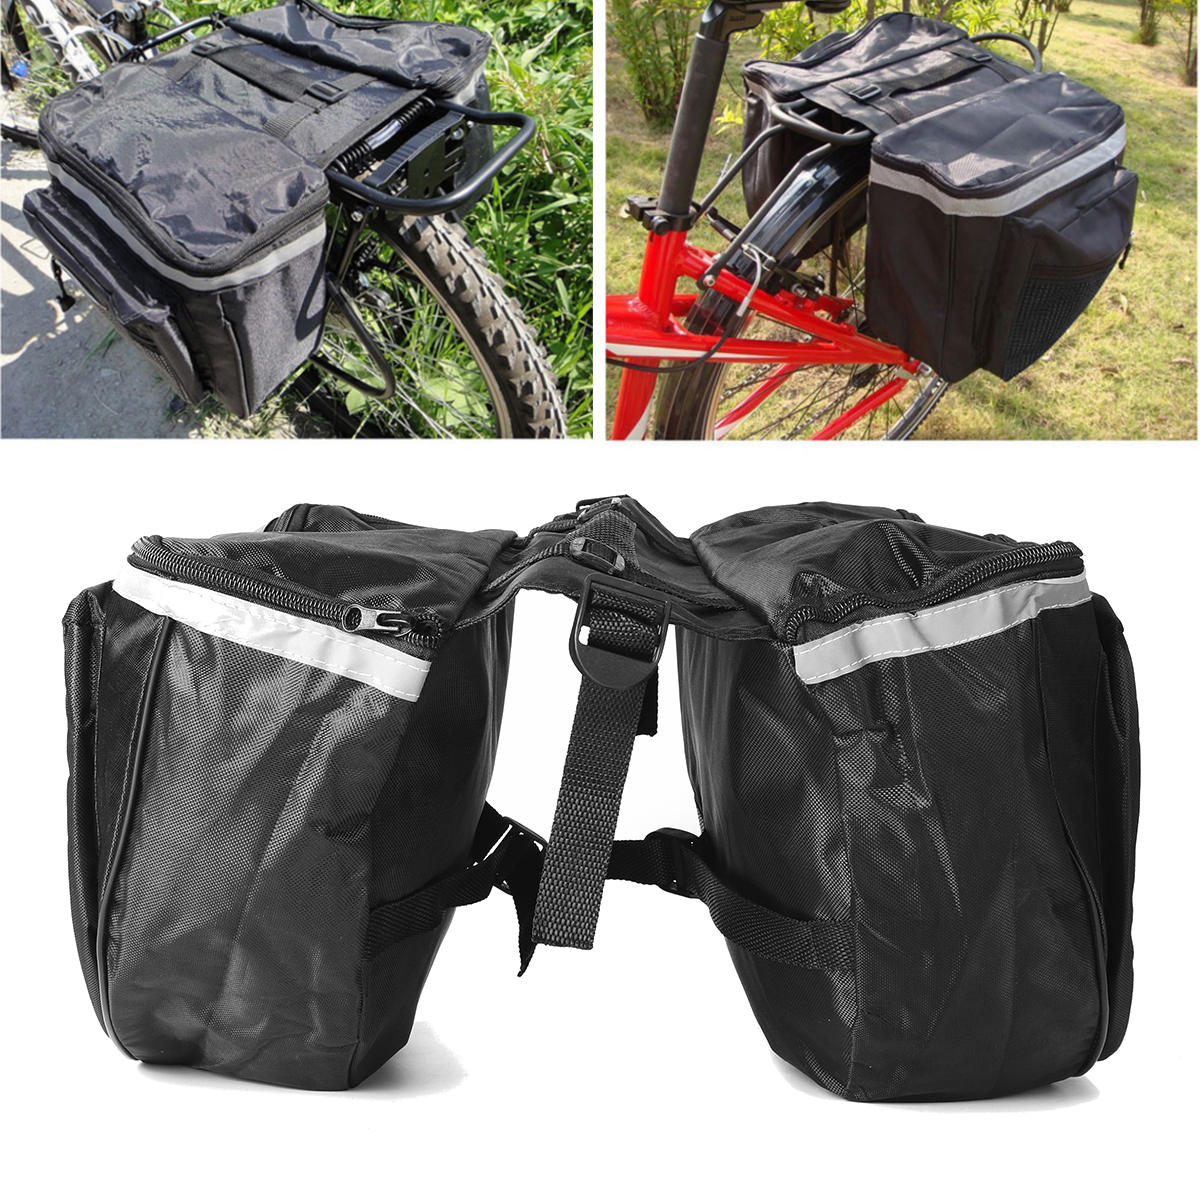 BIKIGHT 25L Cycling Bicycle Rack Rear Double Pannier Bag Luggage Storage Waterproof Bike Bag